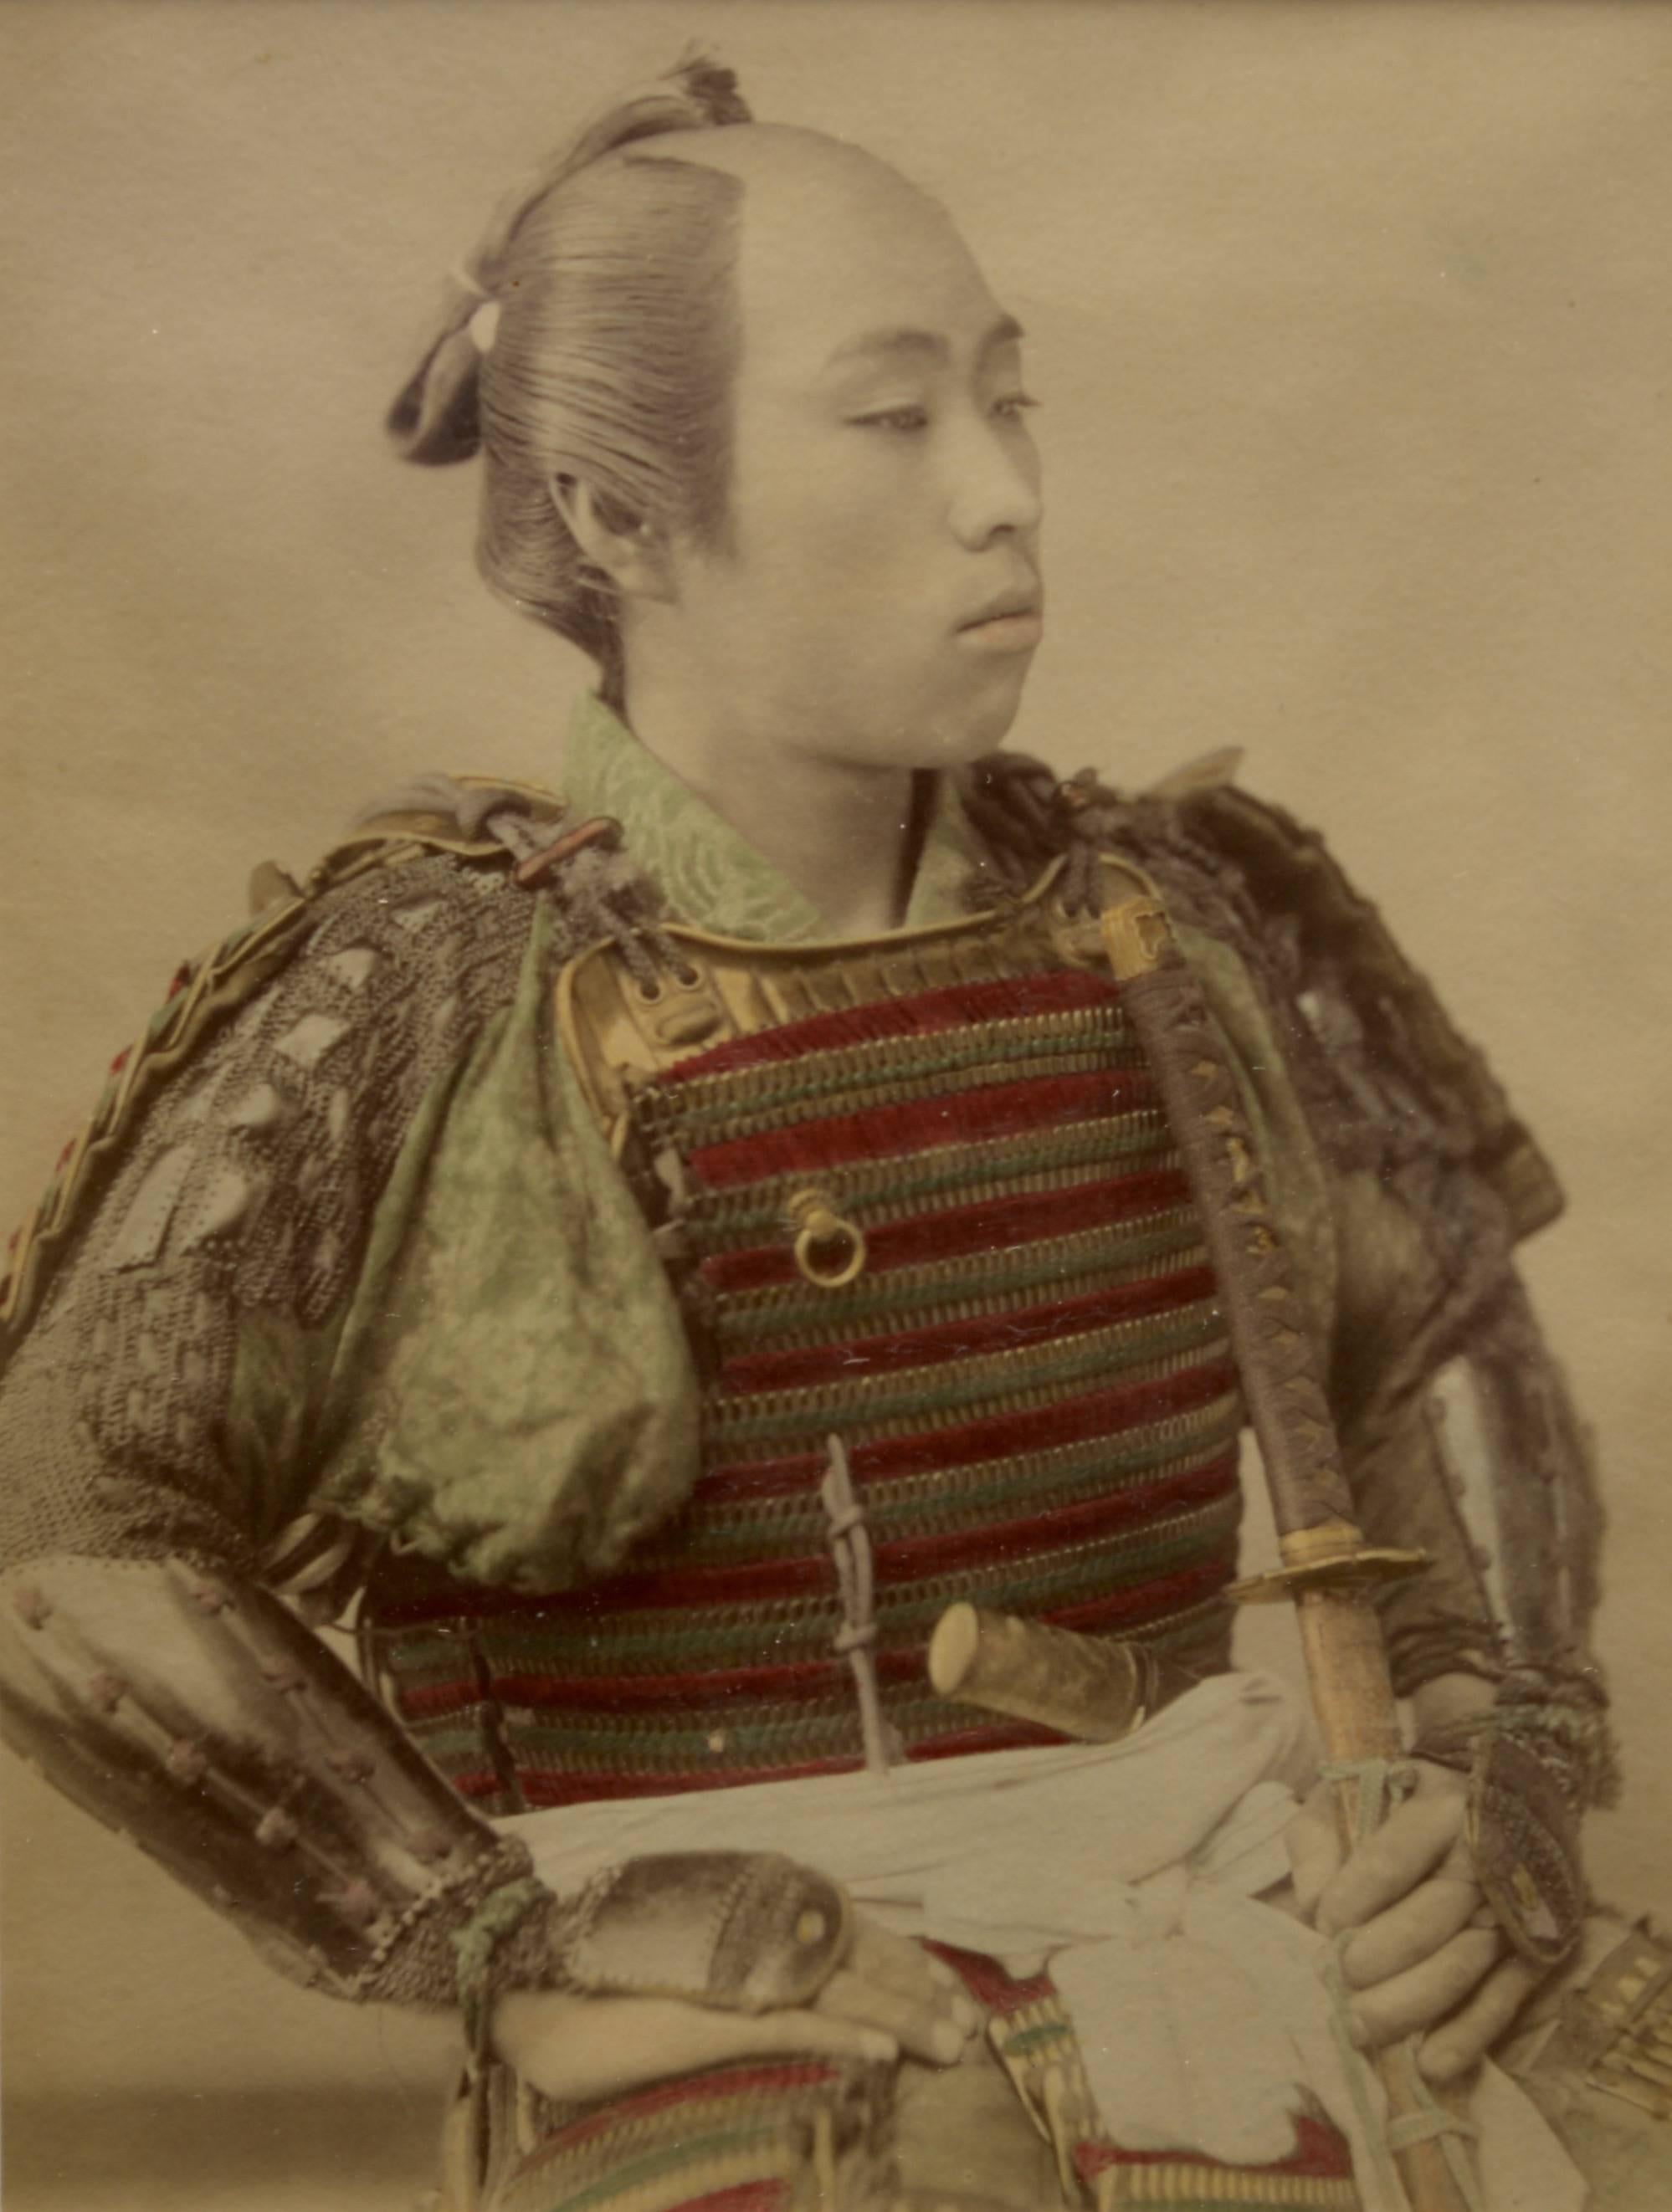 Unknown Black and White Photograph - Photograph of a Samurai